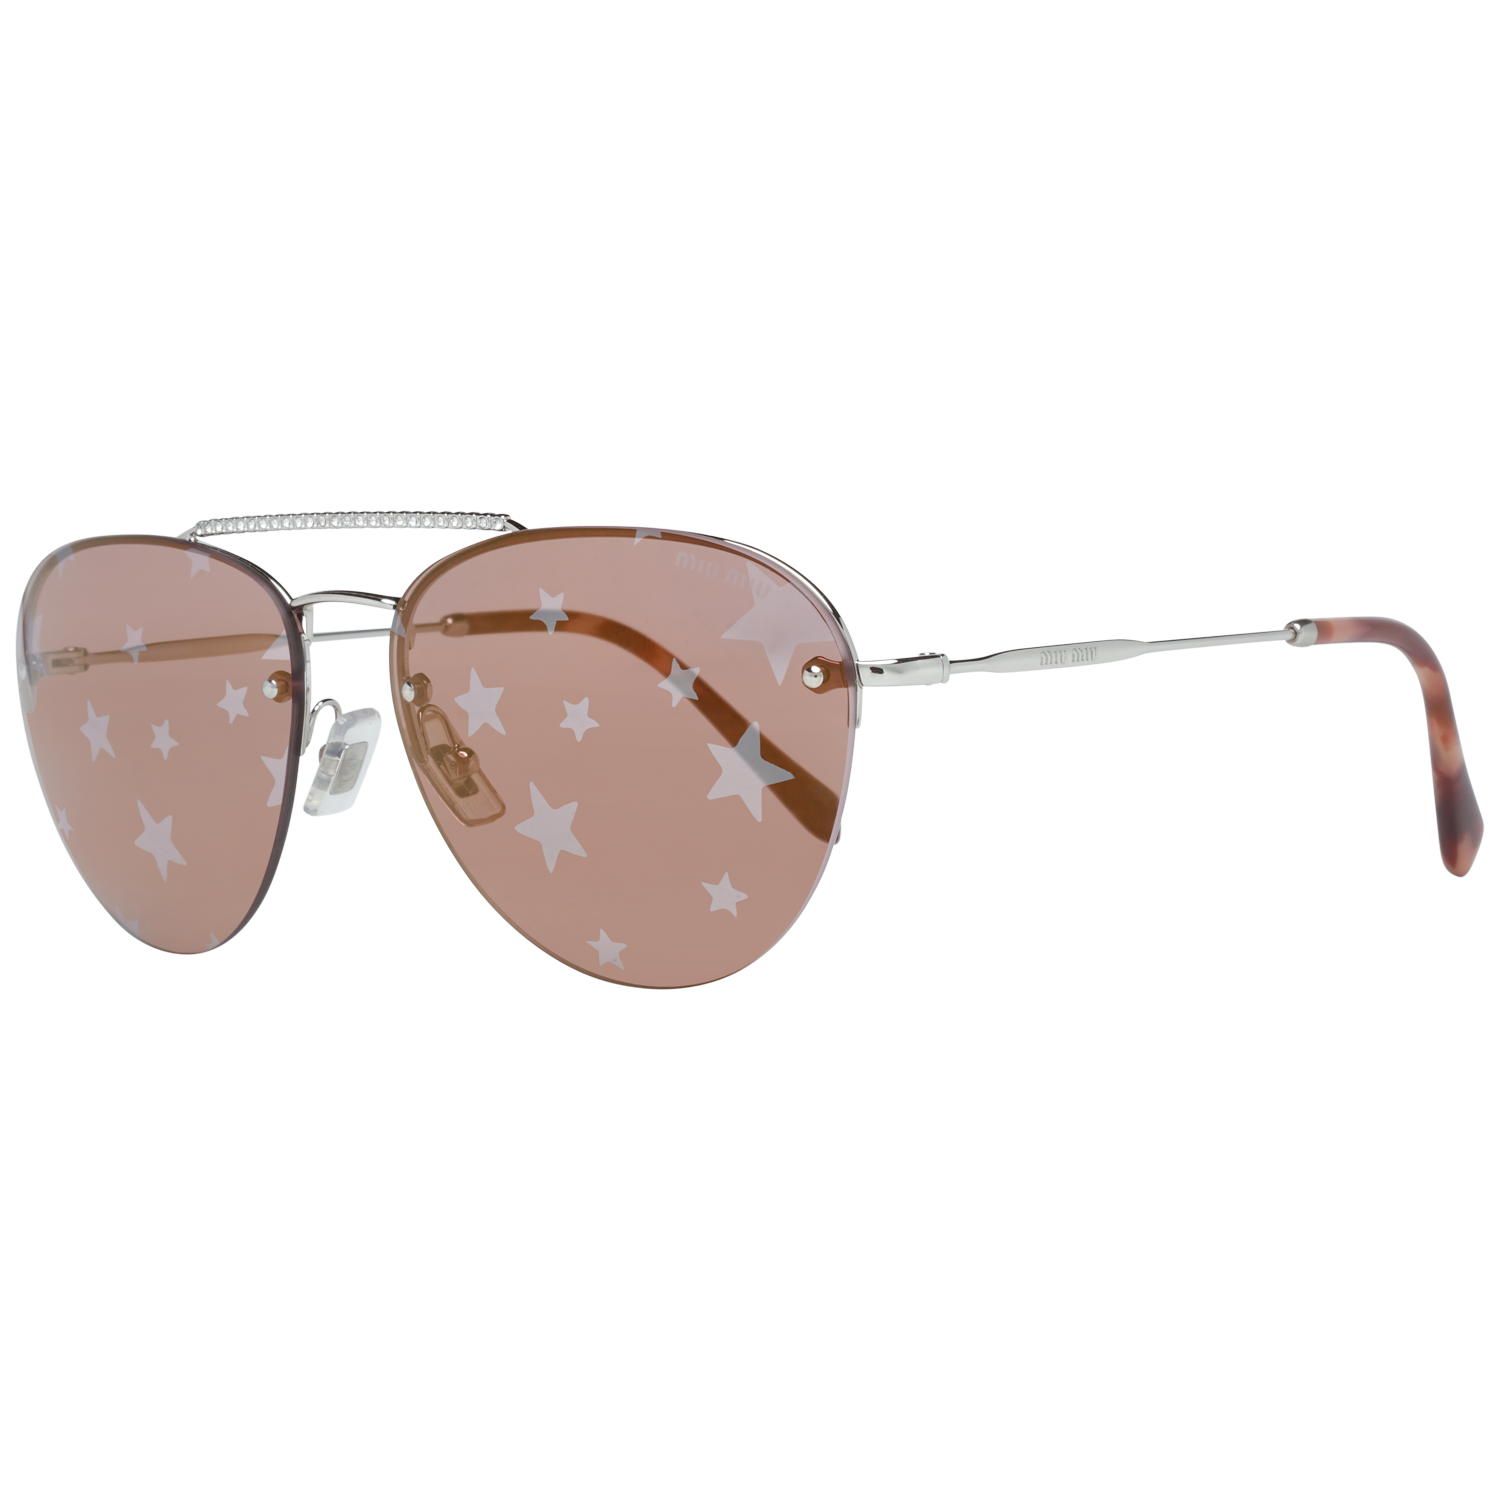 Miu Miu Sunglasses MU54US 1BC195 59 Silver